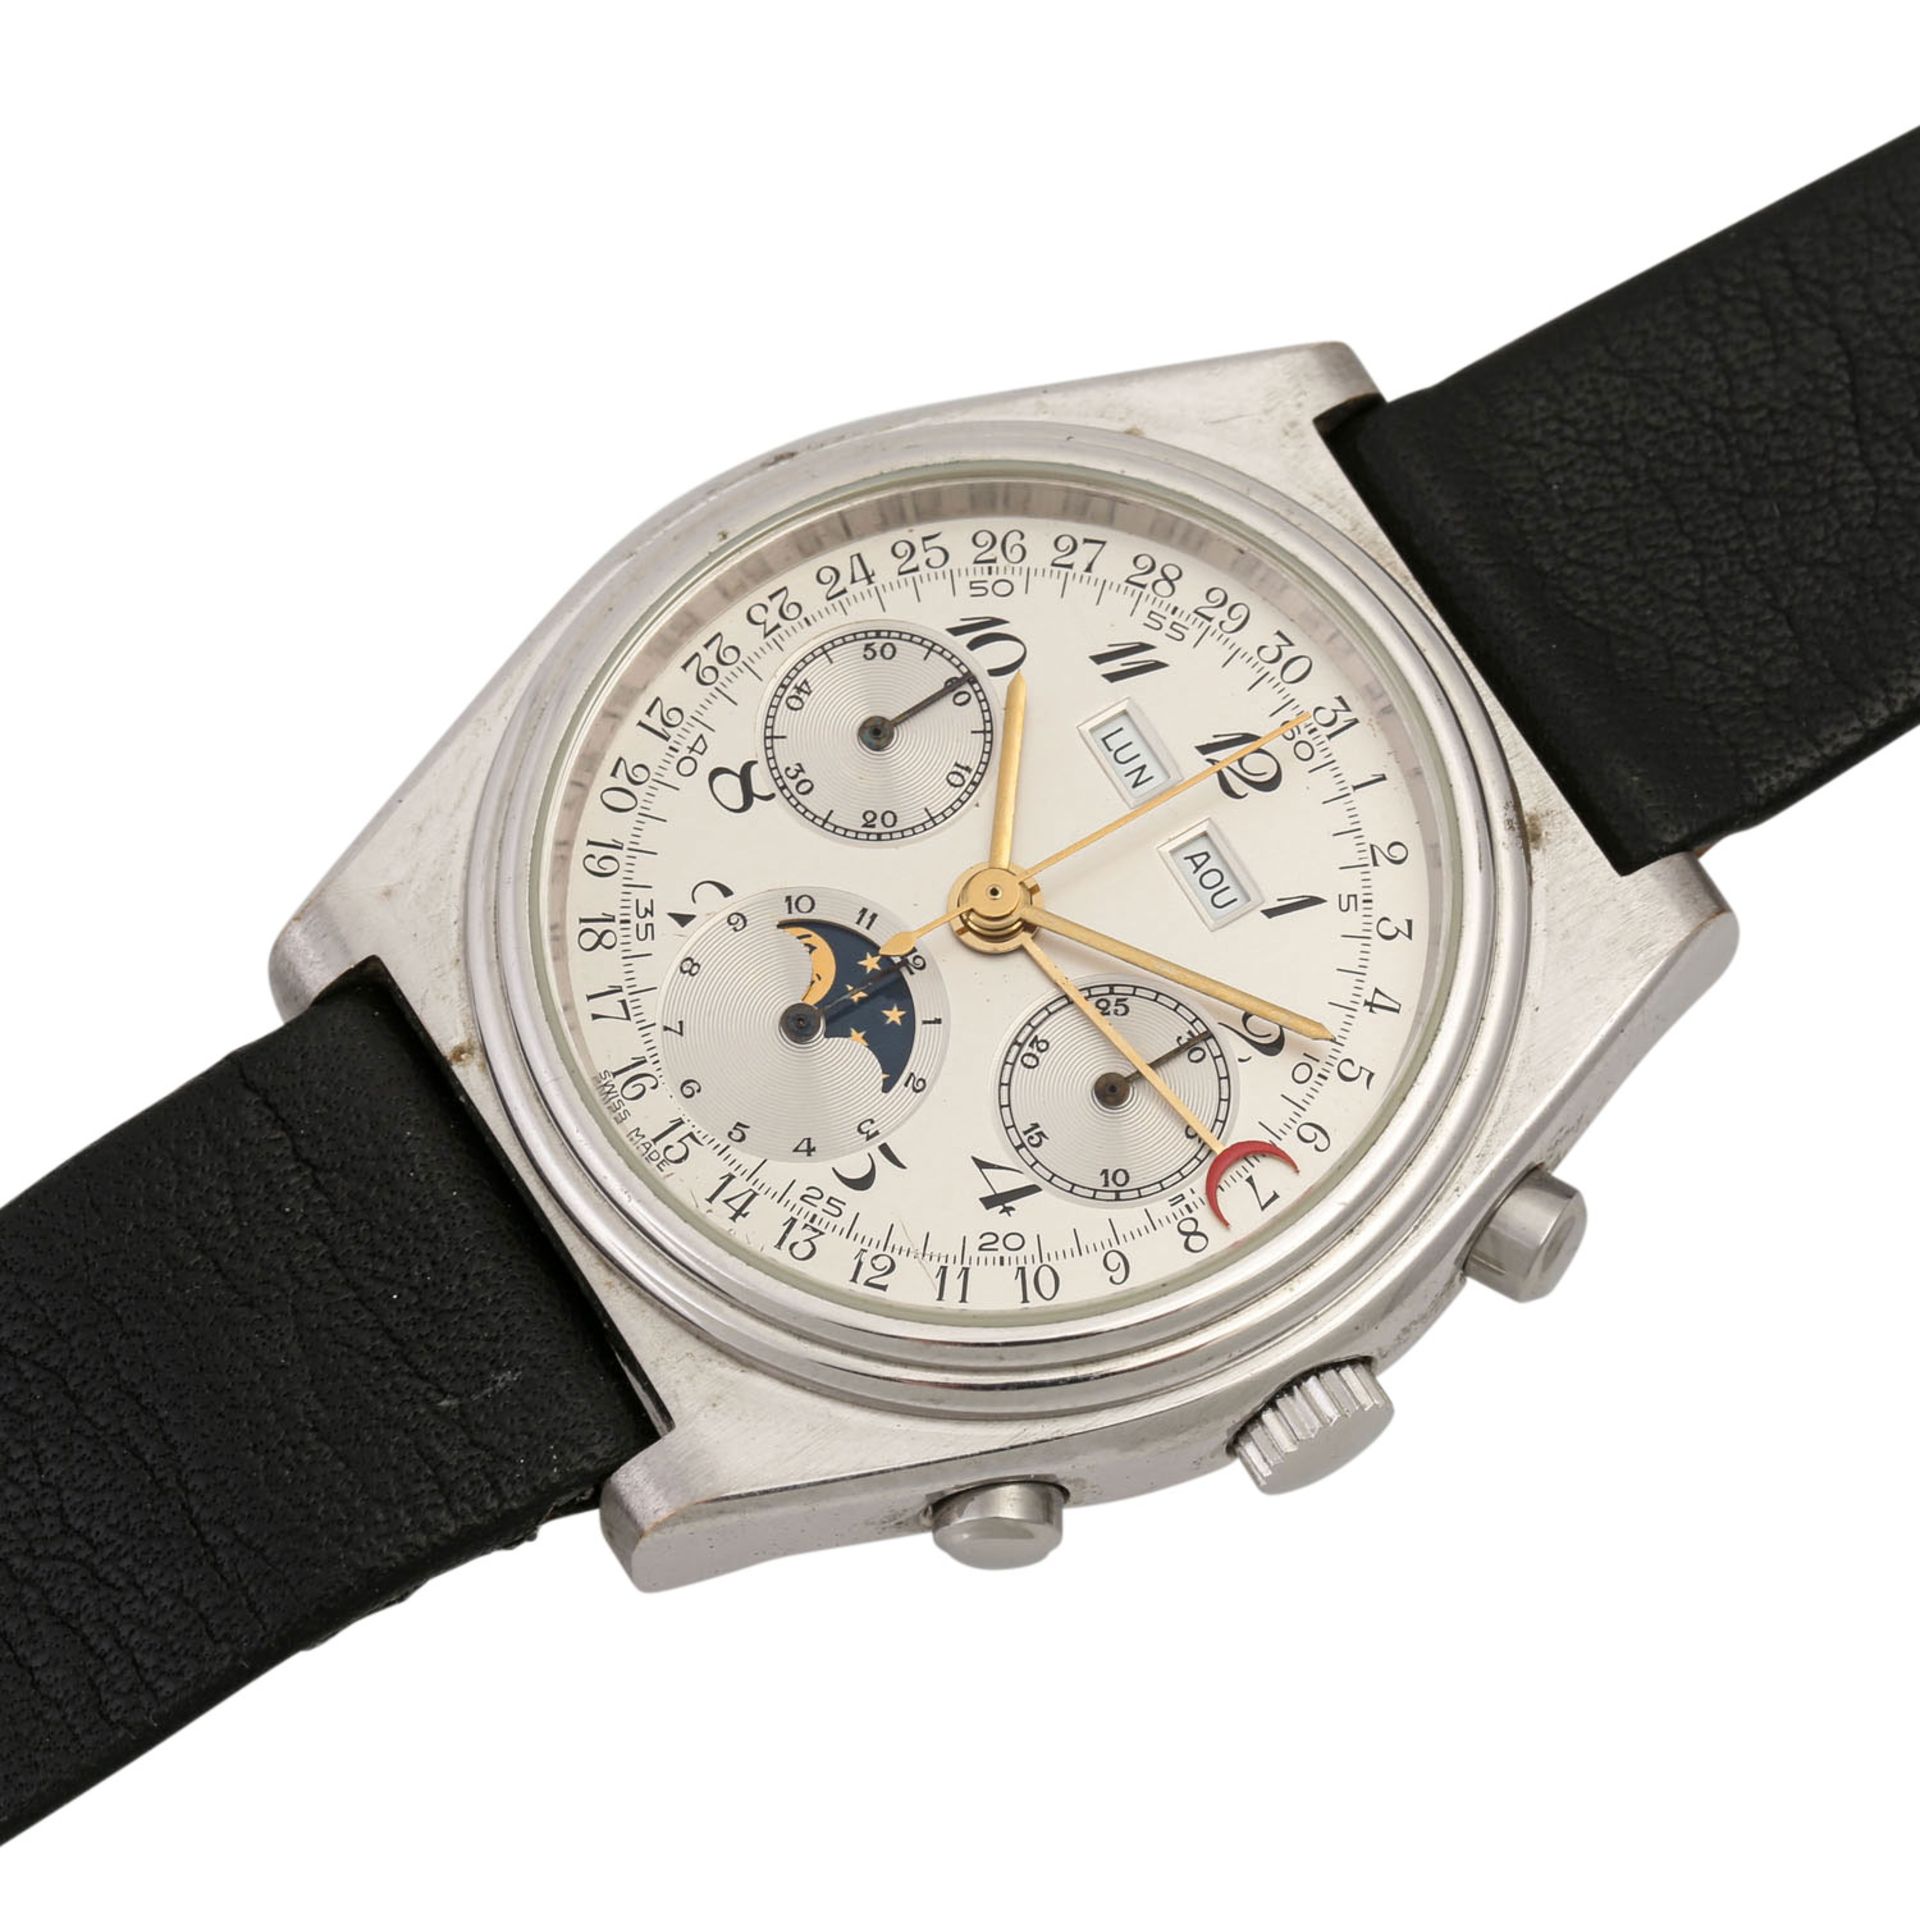 VINTAGE Chronograph mit Tag/Datum und Mondphasen. Armbanduhr. Edelstahl. Handaufzug-We - Image 4 of 5